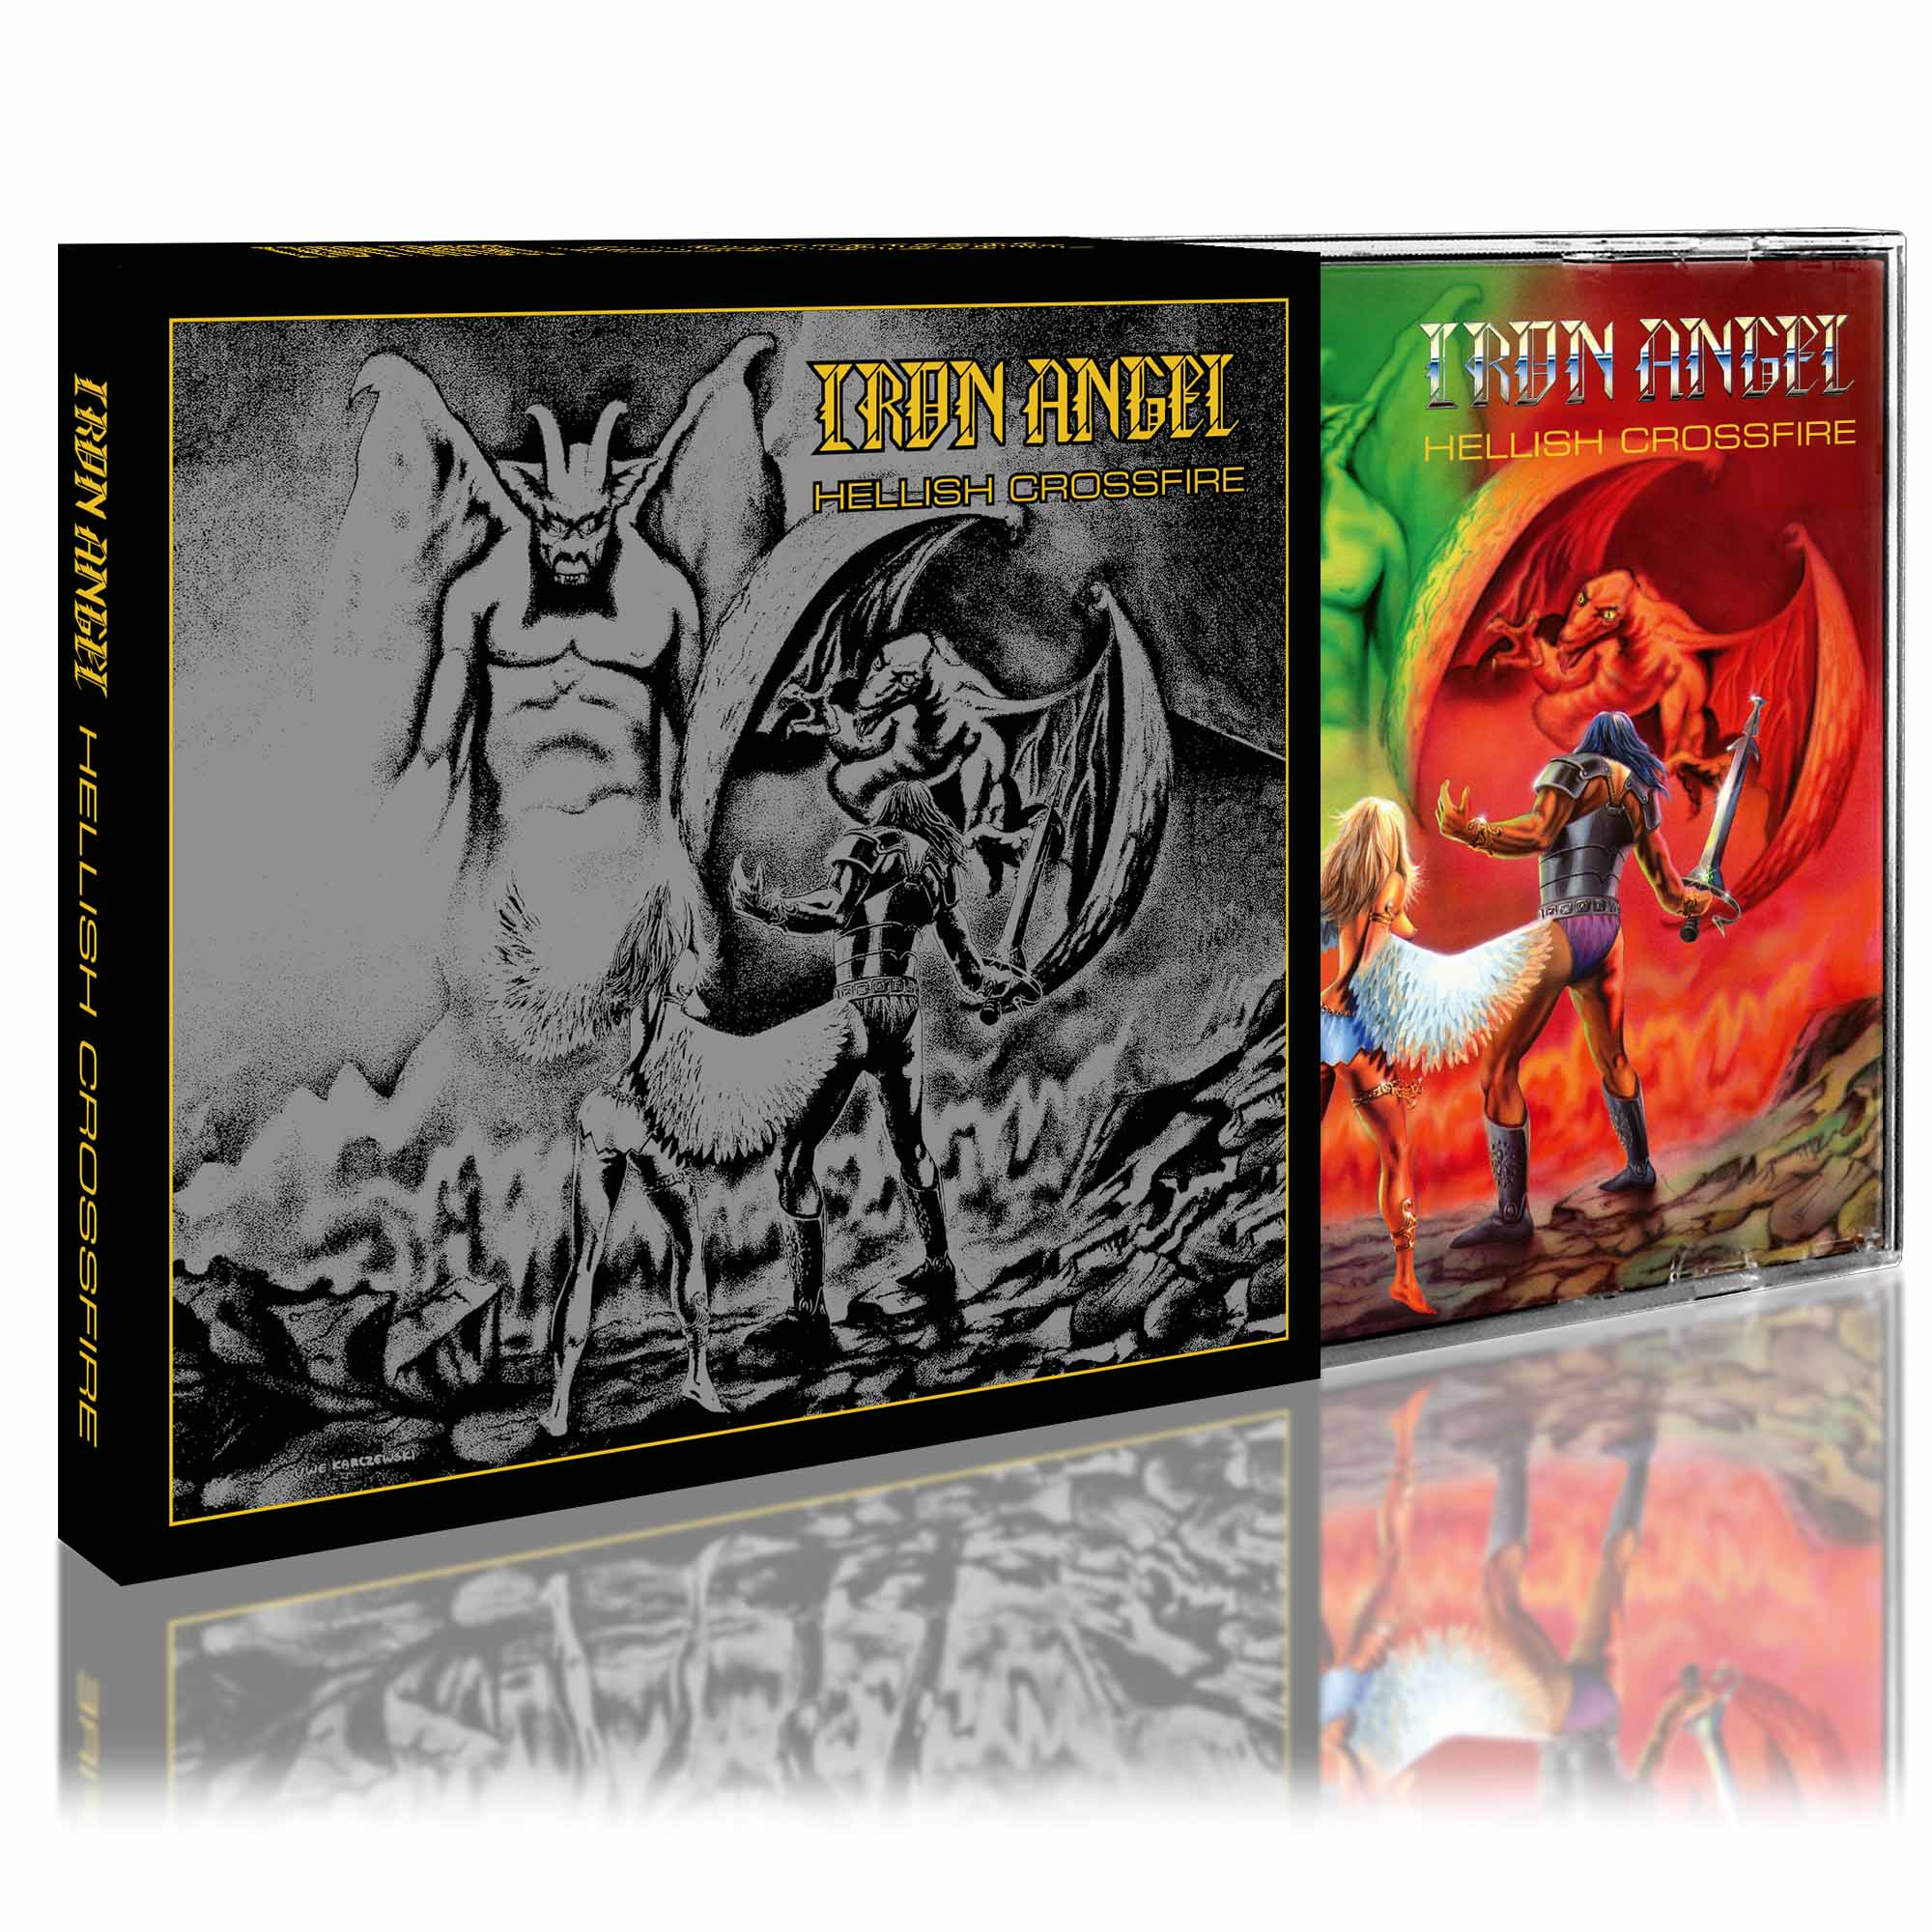 IRON ANGEL - Hellish Crossfire  CD